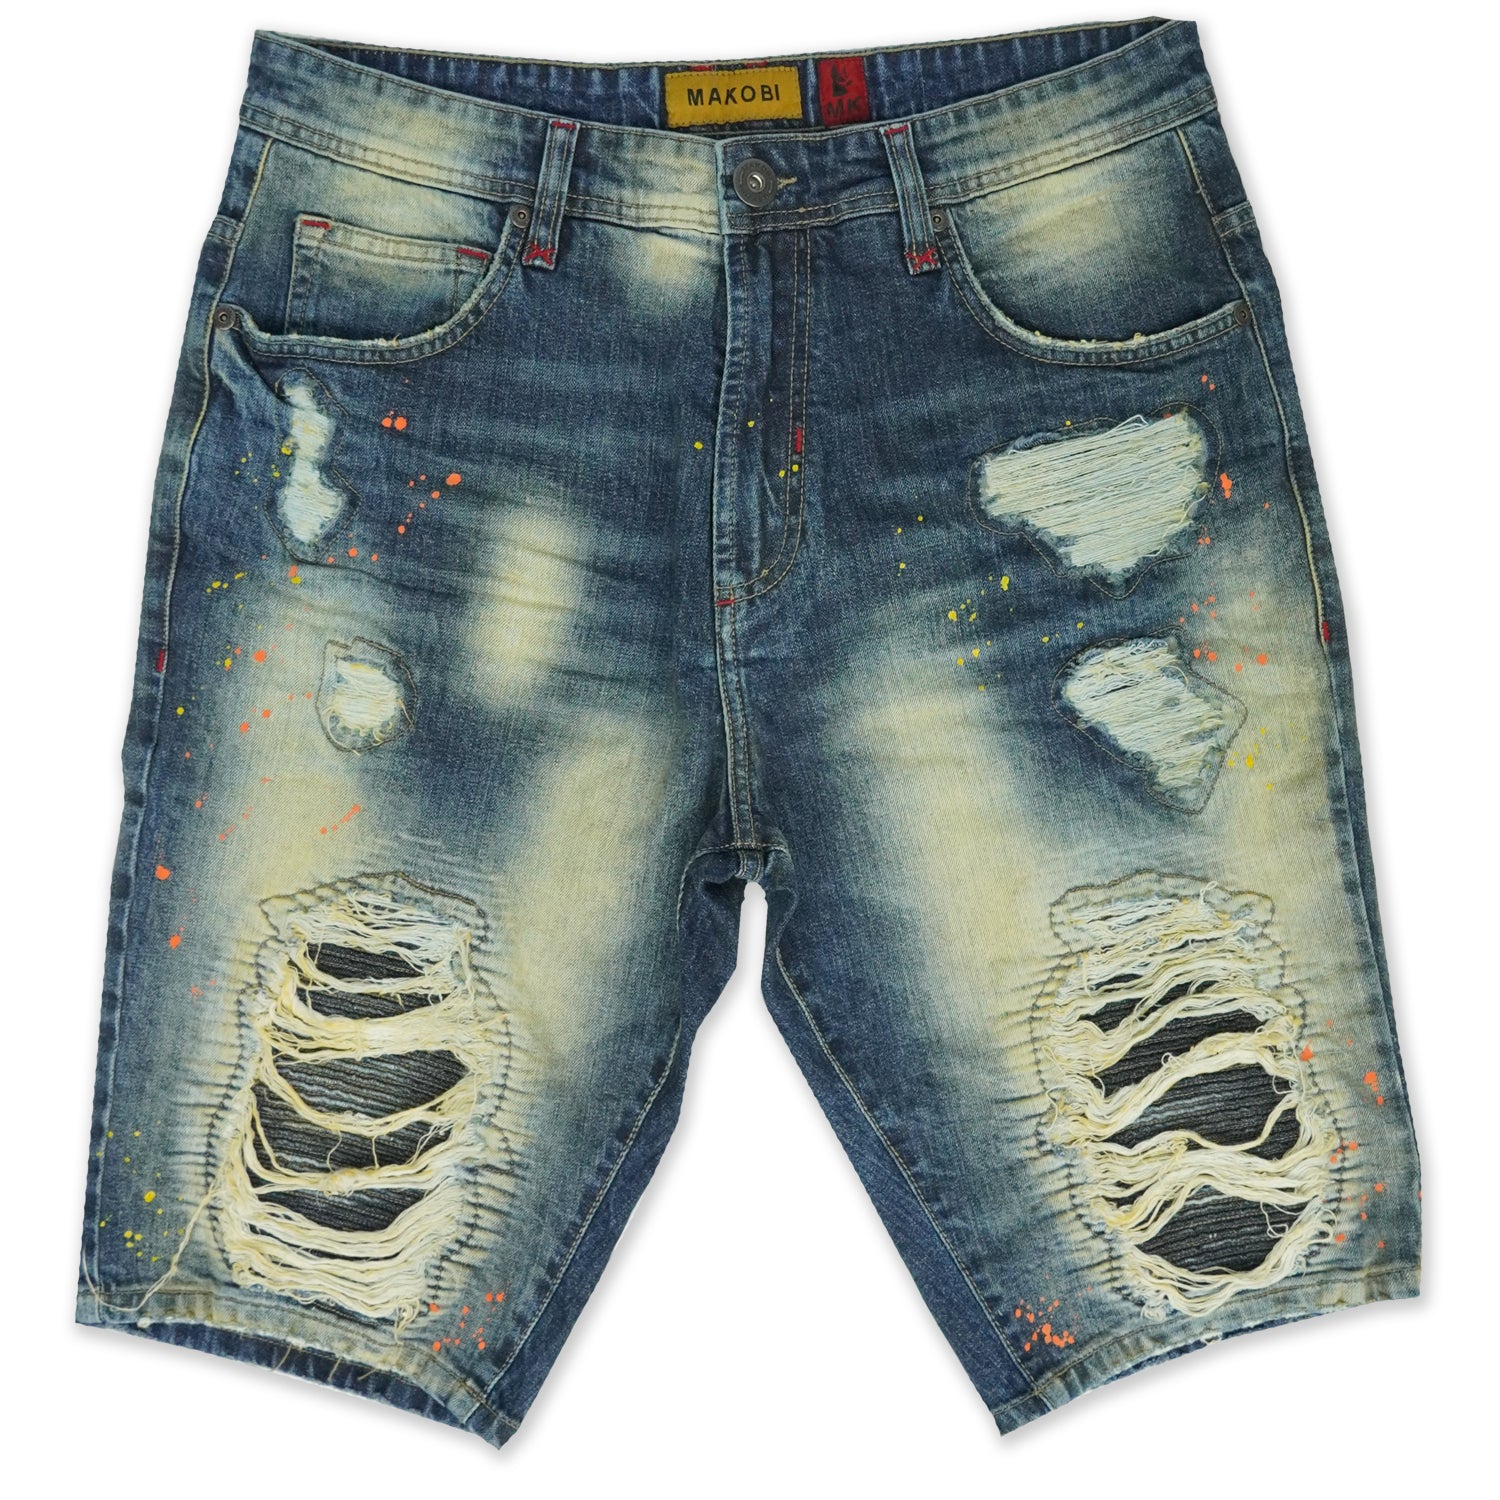 M920 Stinson Shredded Shorts w/Paint Splash - Dirt